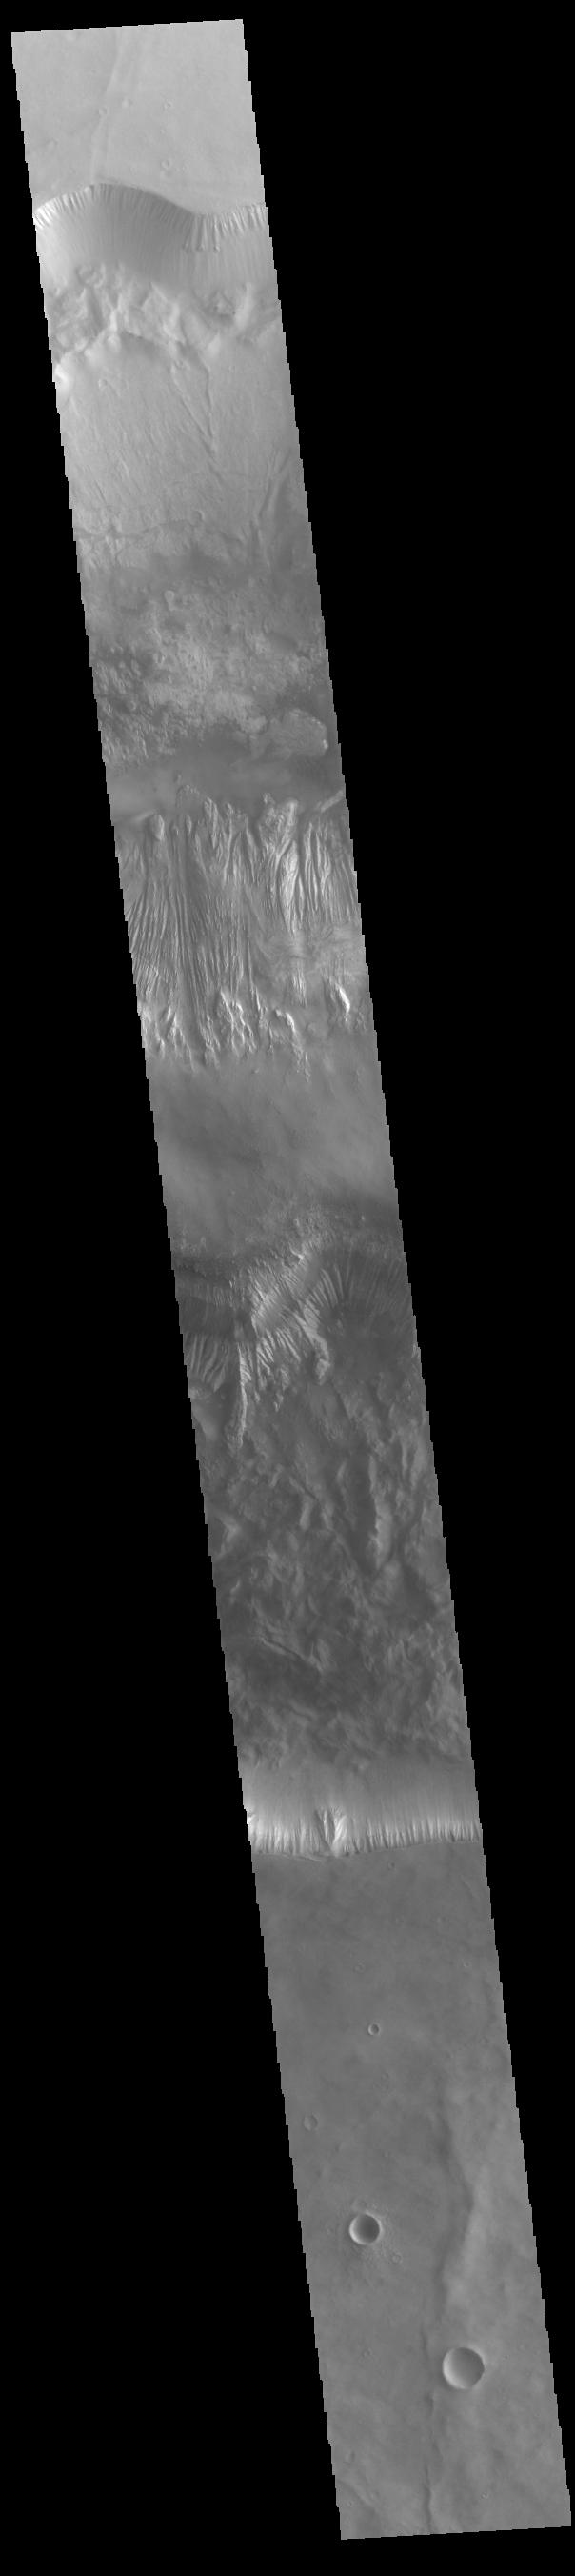 PIA24214: Hebes Chasma